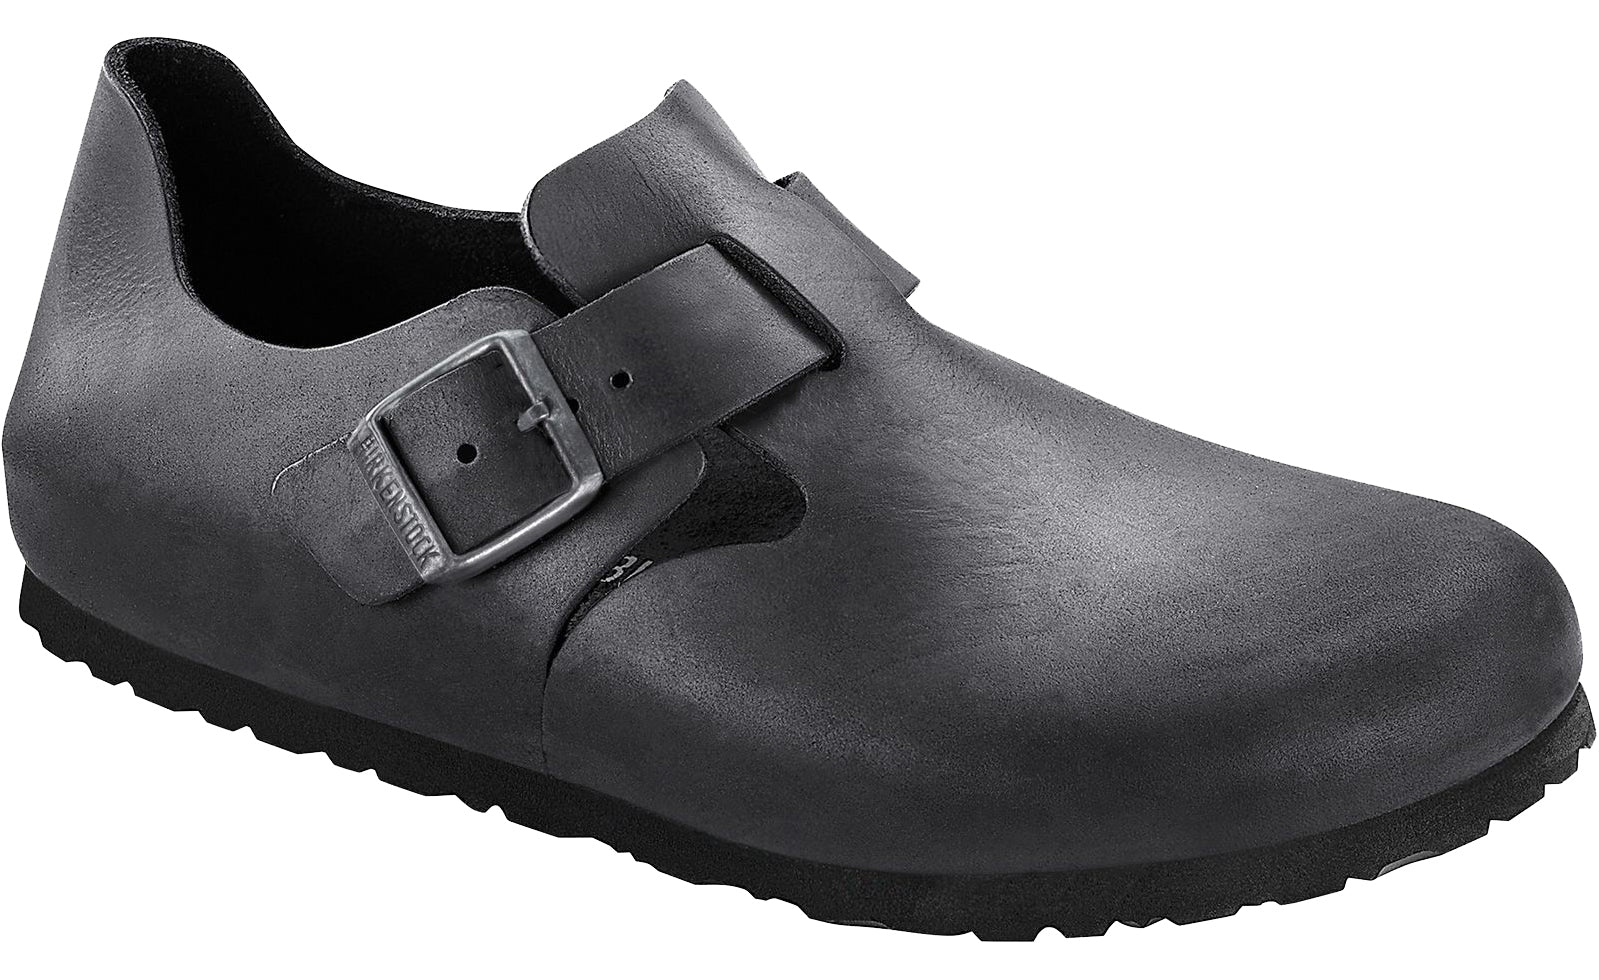 Birkenstock London Black Oiled Leather Original Footbed - Grady’s Feet Essentials - Birkenstock